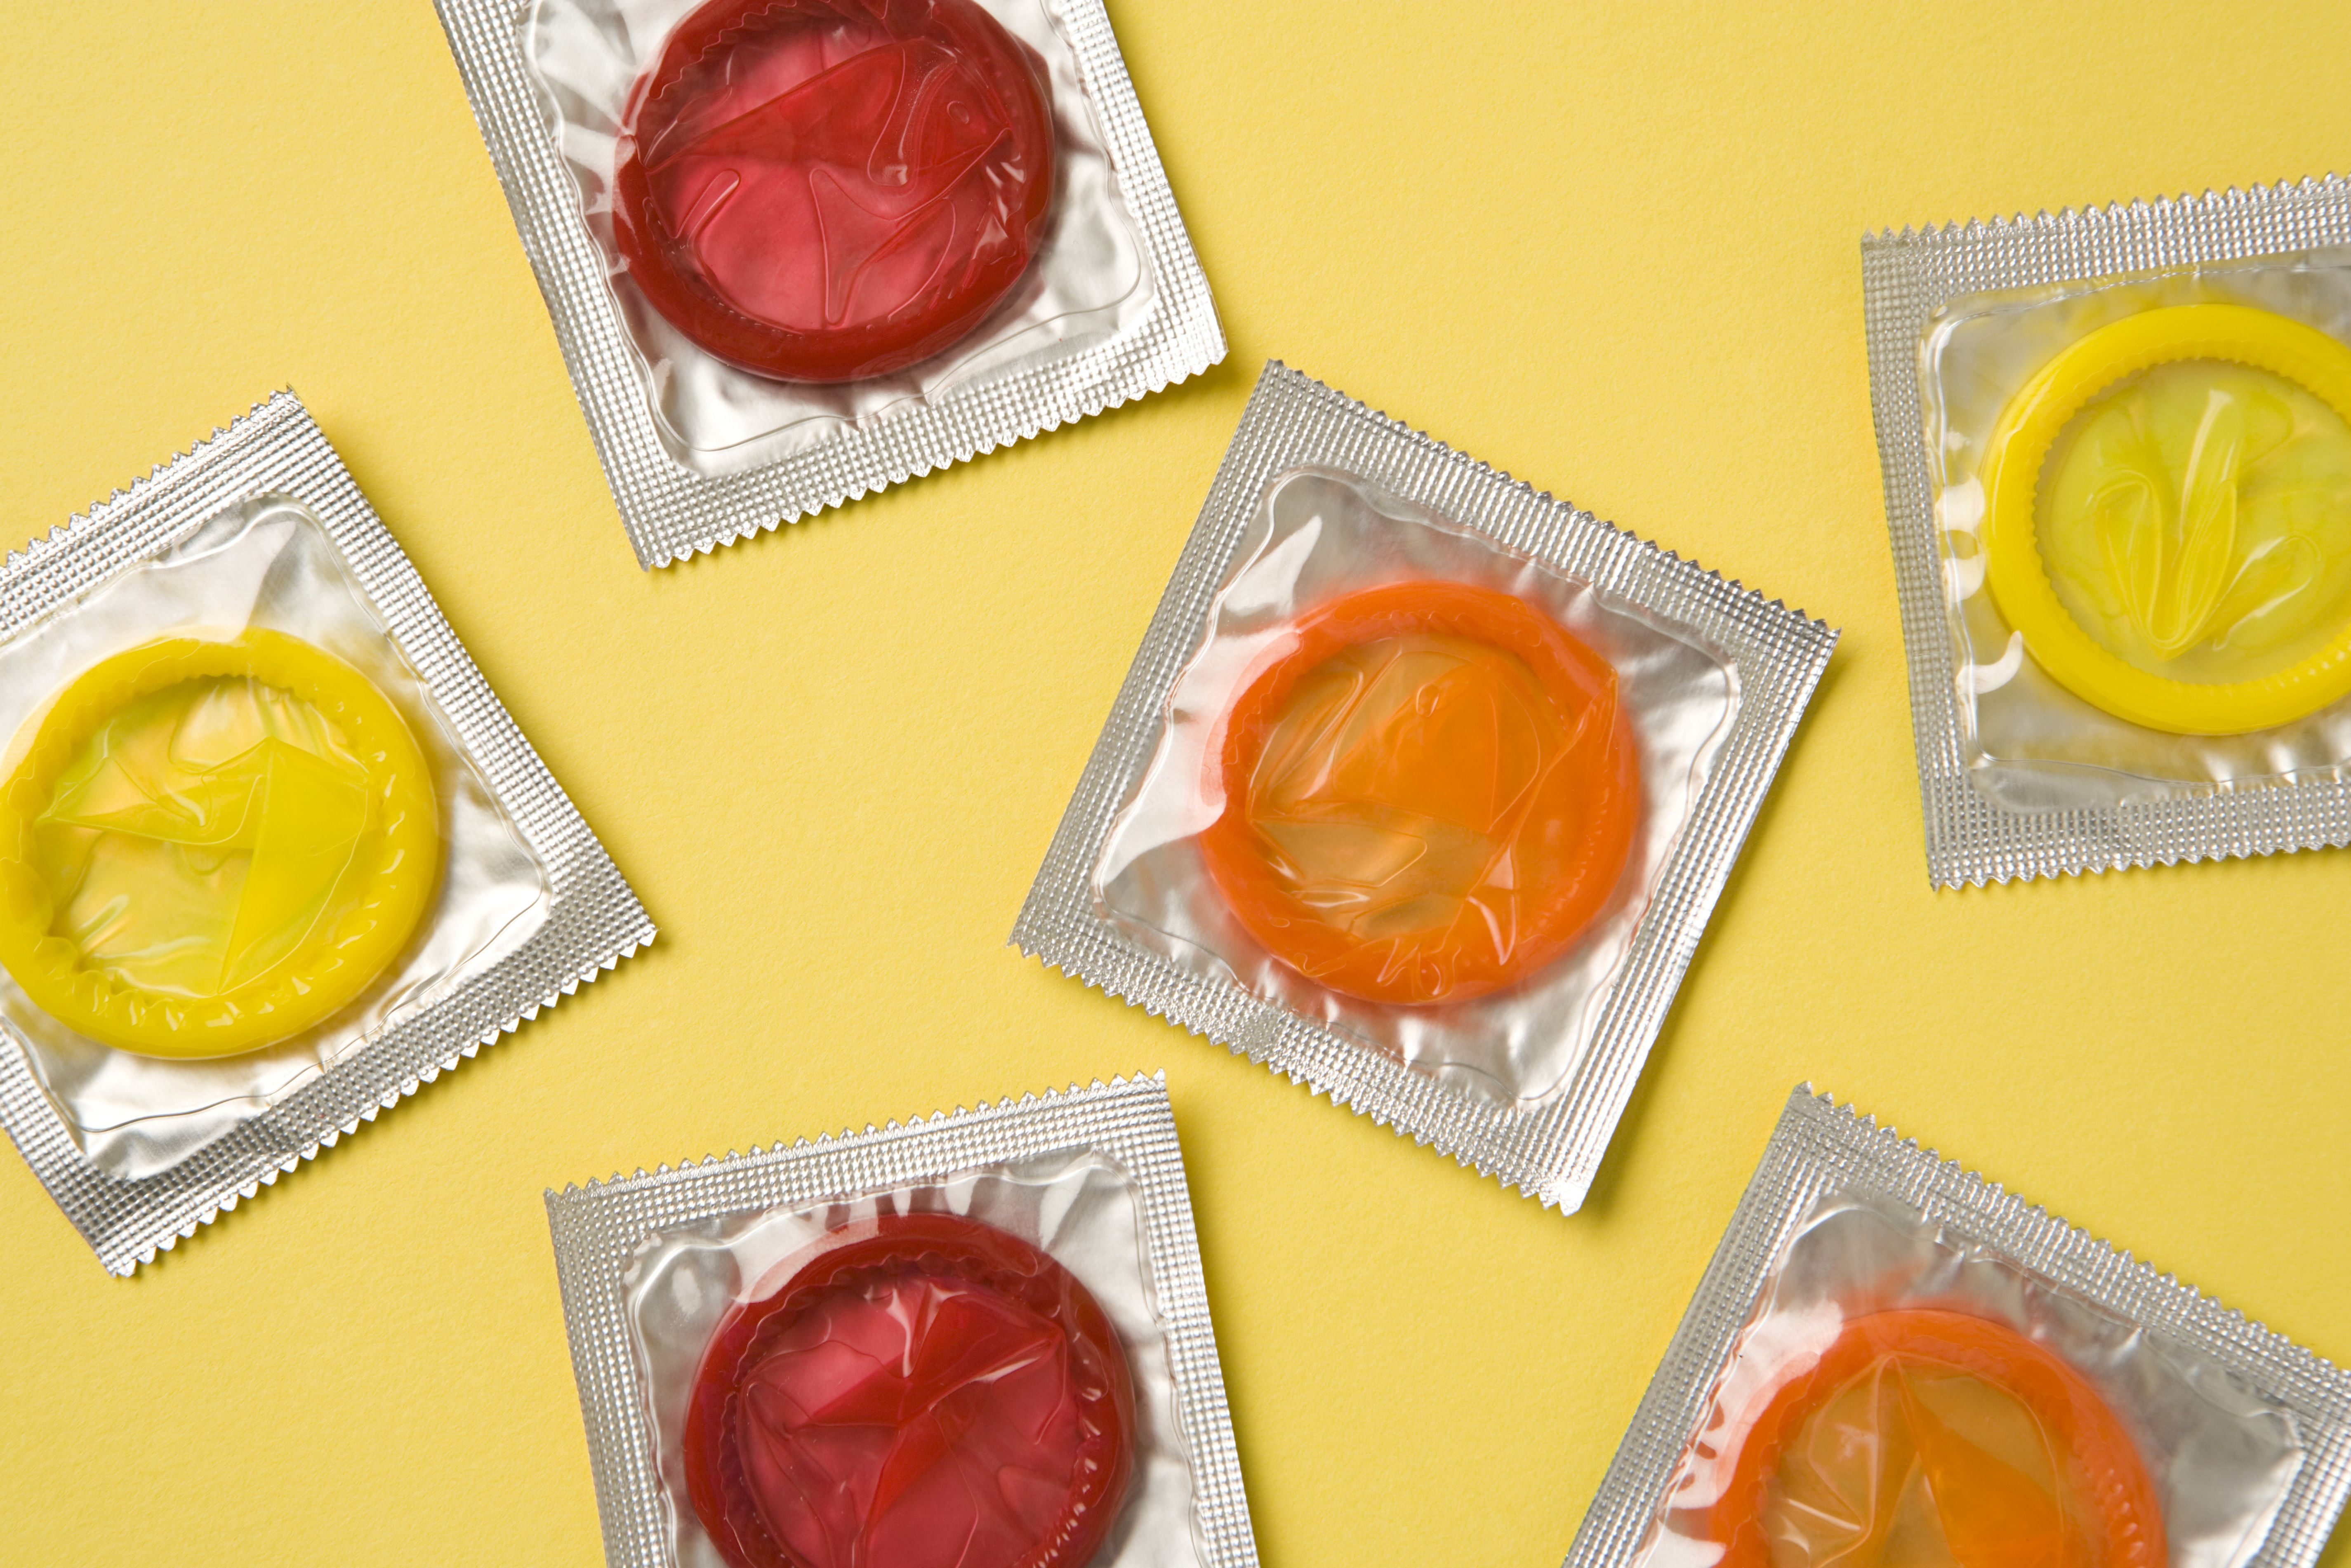 What makes a condom break